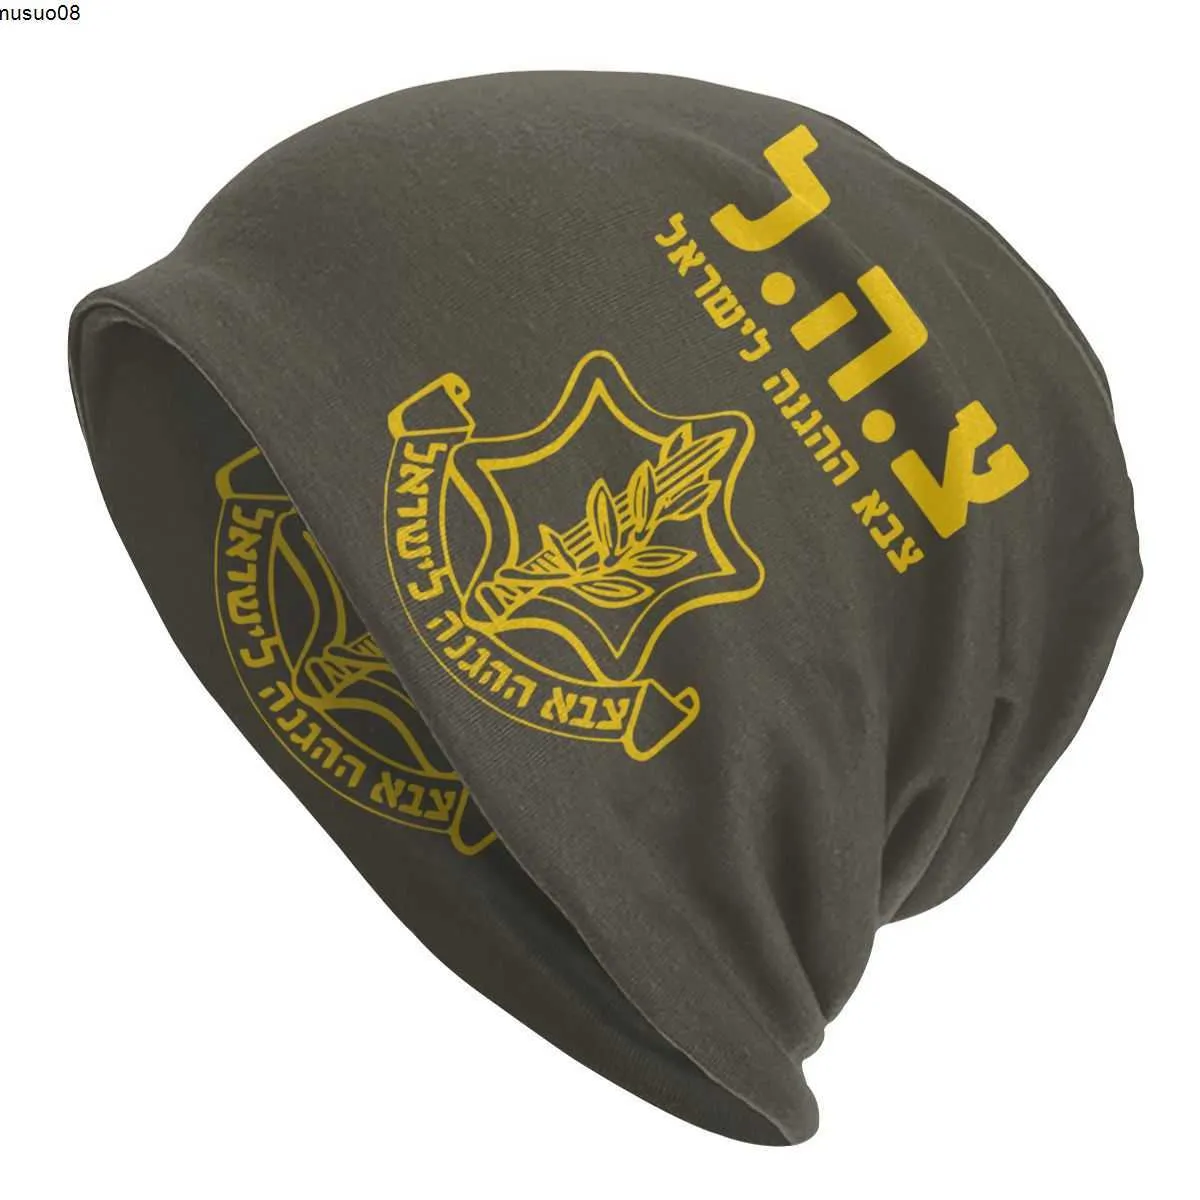 Beanie/Skull Caps Idf Israel Defense Forces Caps Military Army Hip Hop Unisex Outdoor Skallies Beanies Hats Spring Warm Dual-One Bonnet Knit Hat J230518